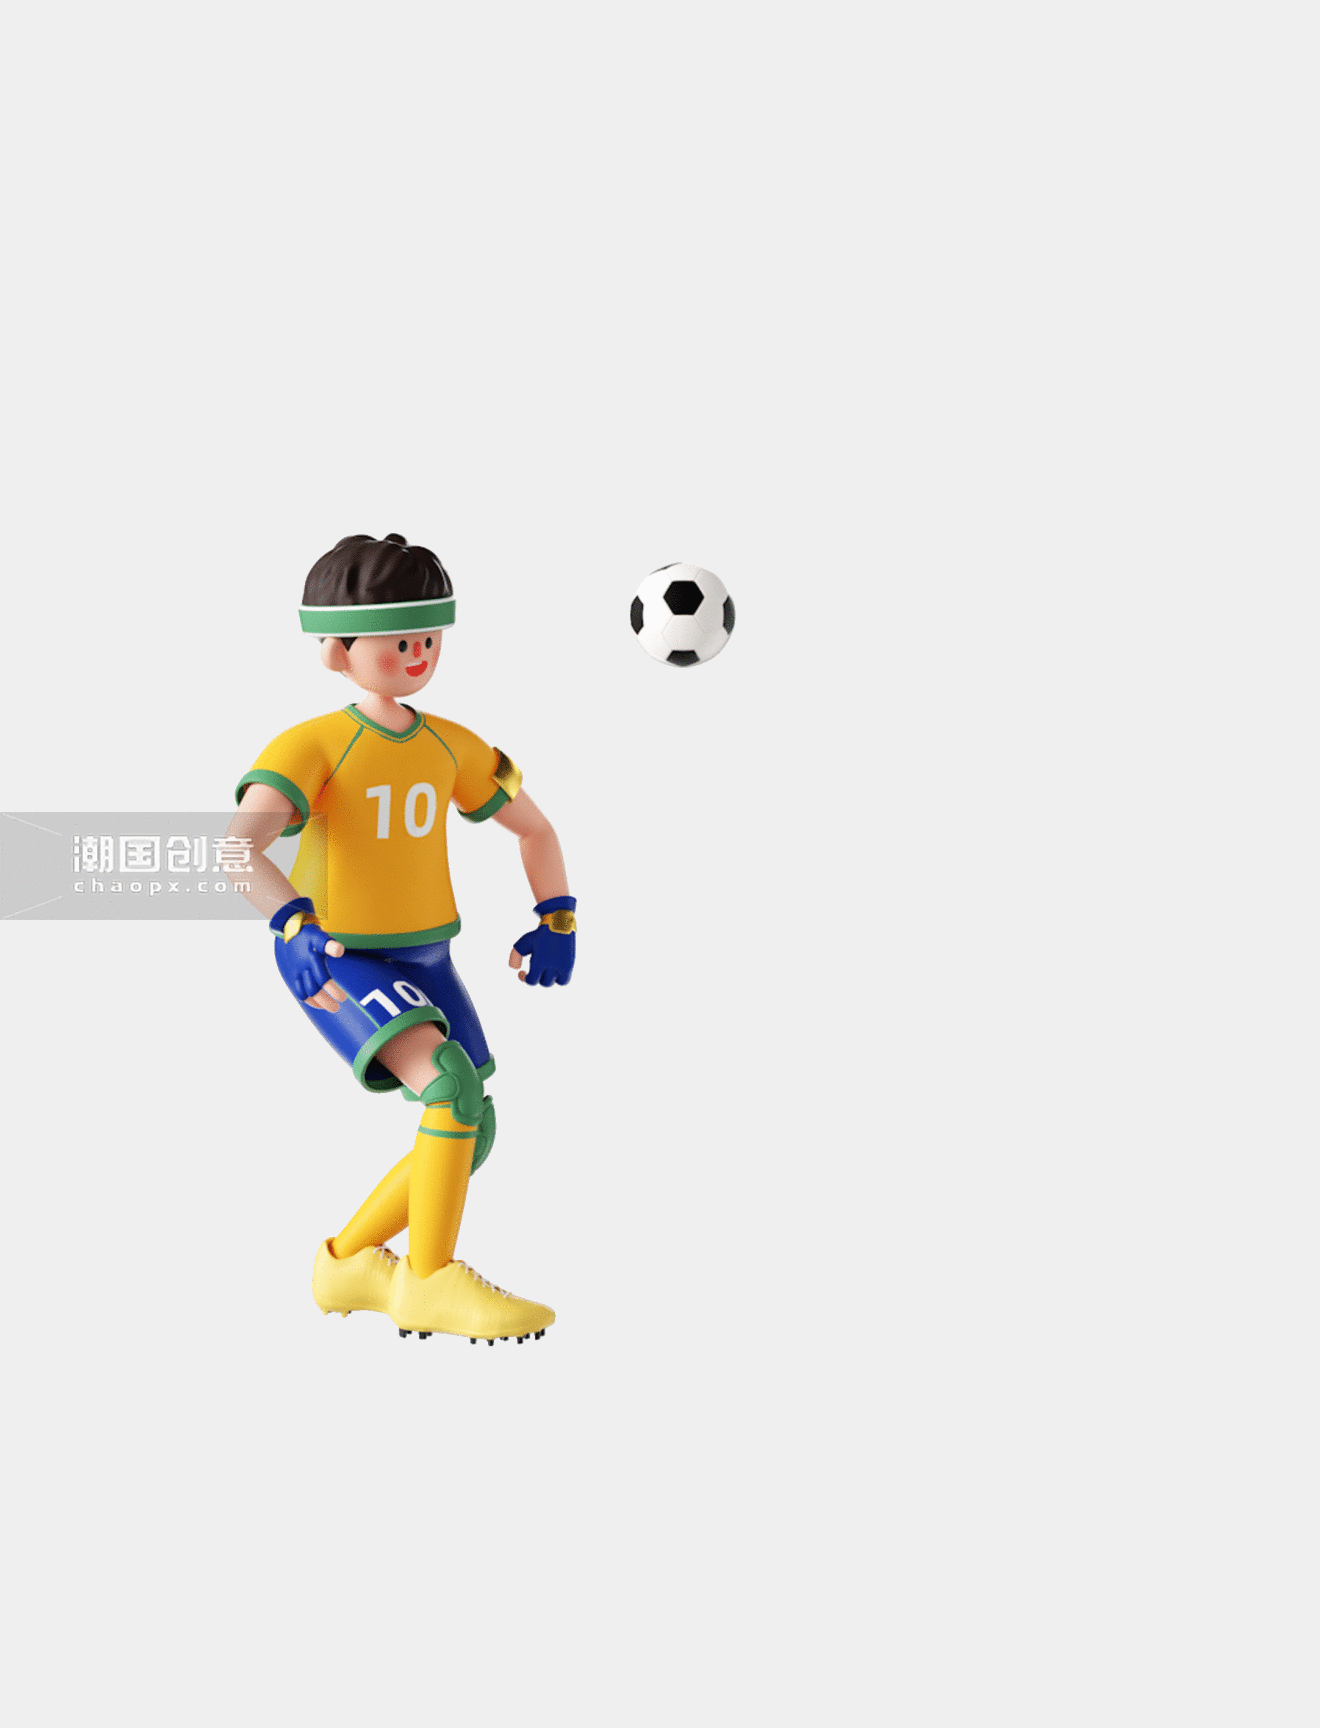 C4D立体世界杯足球赛事比赛足球运动员空中接球3D动图gif